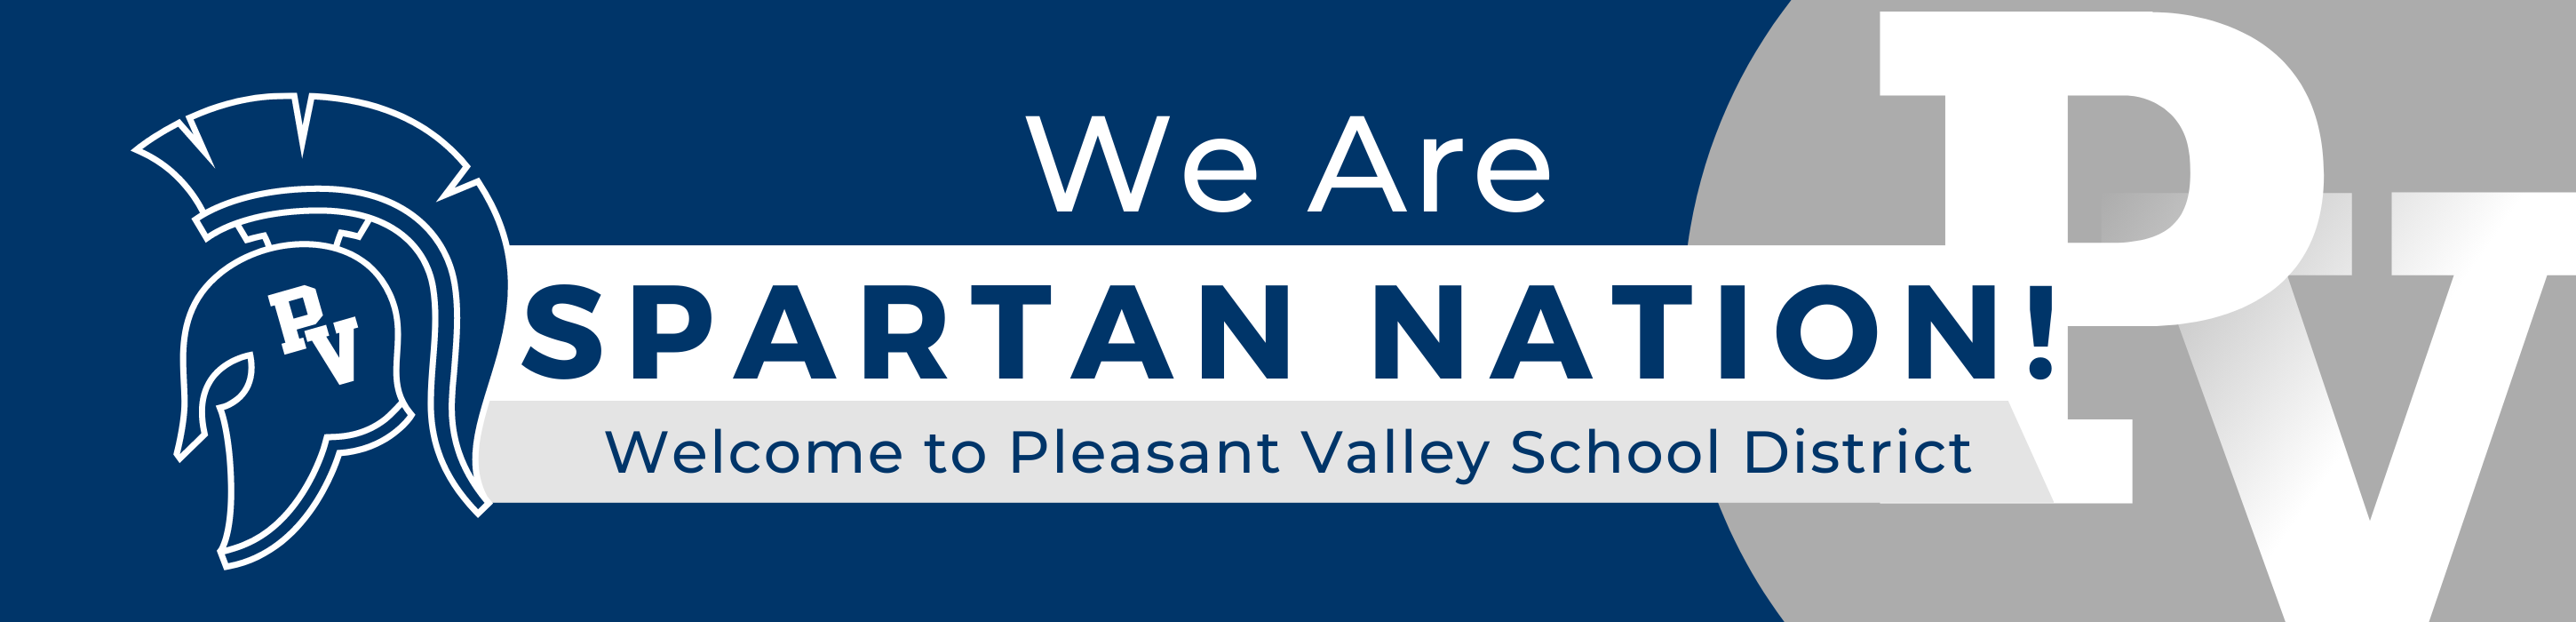 Pleasant Valley School District Property Tax Rebate